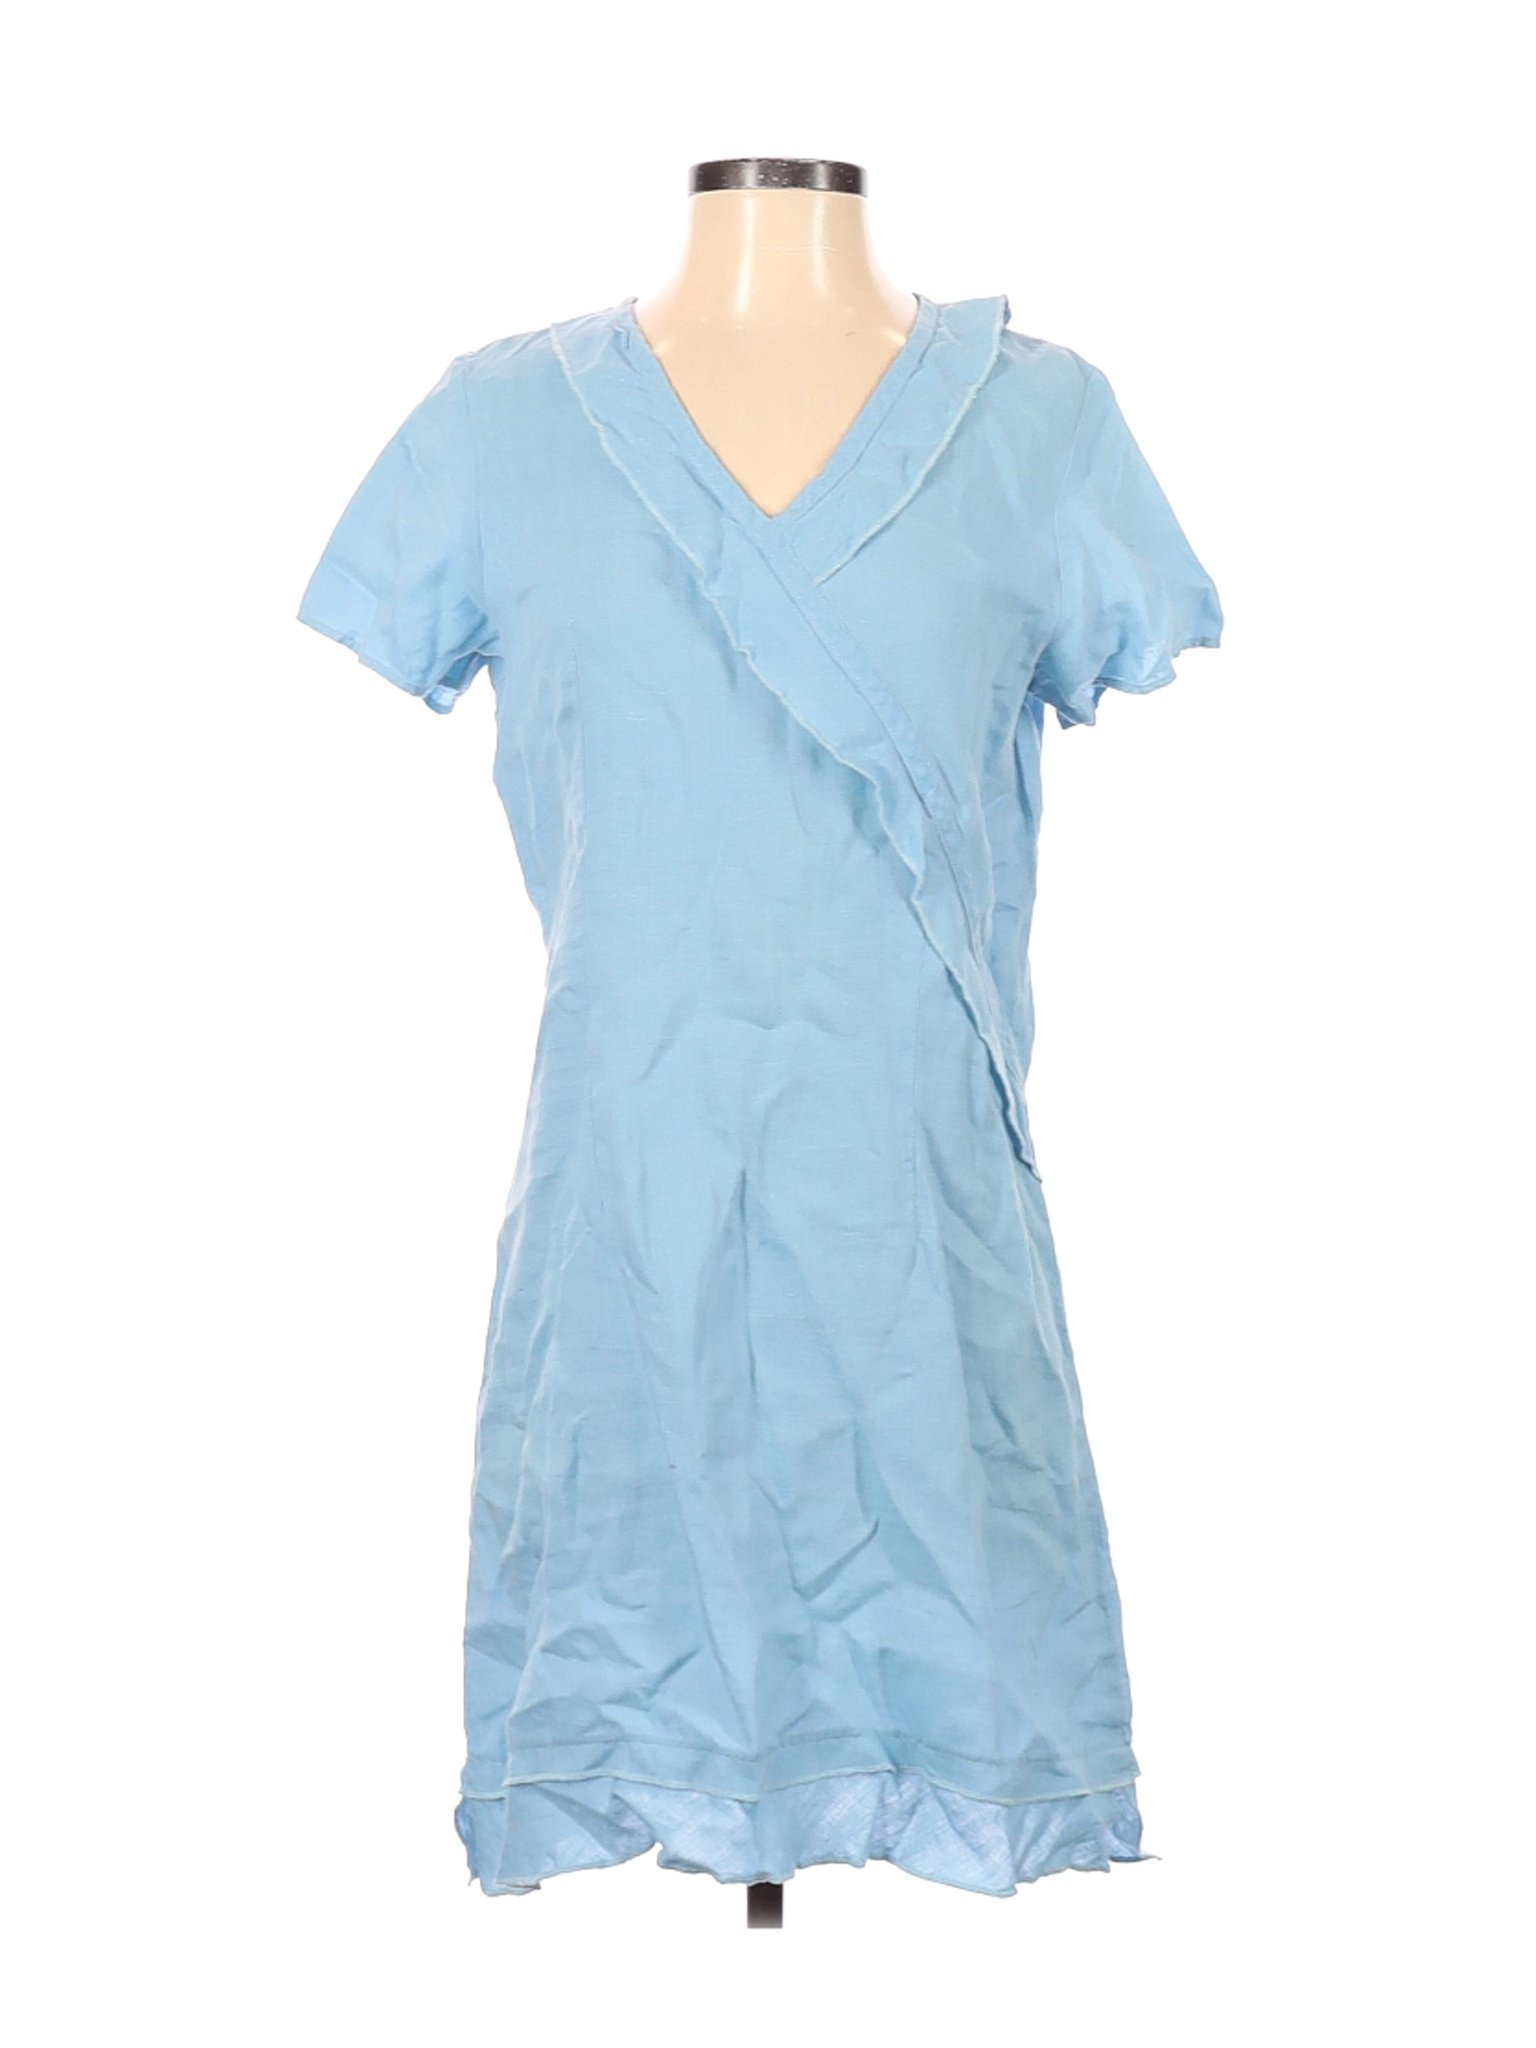 Liz and Jane Women Blue Casual Dress S | eBay